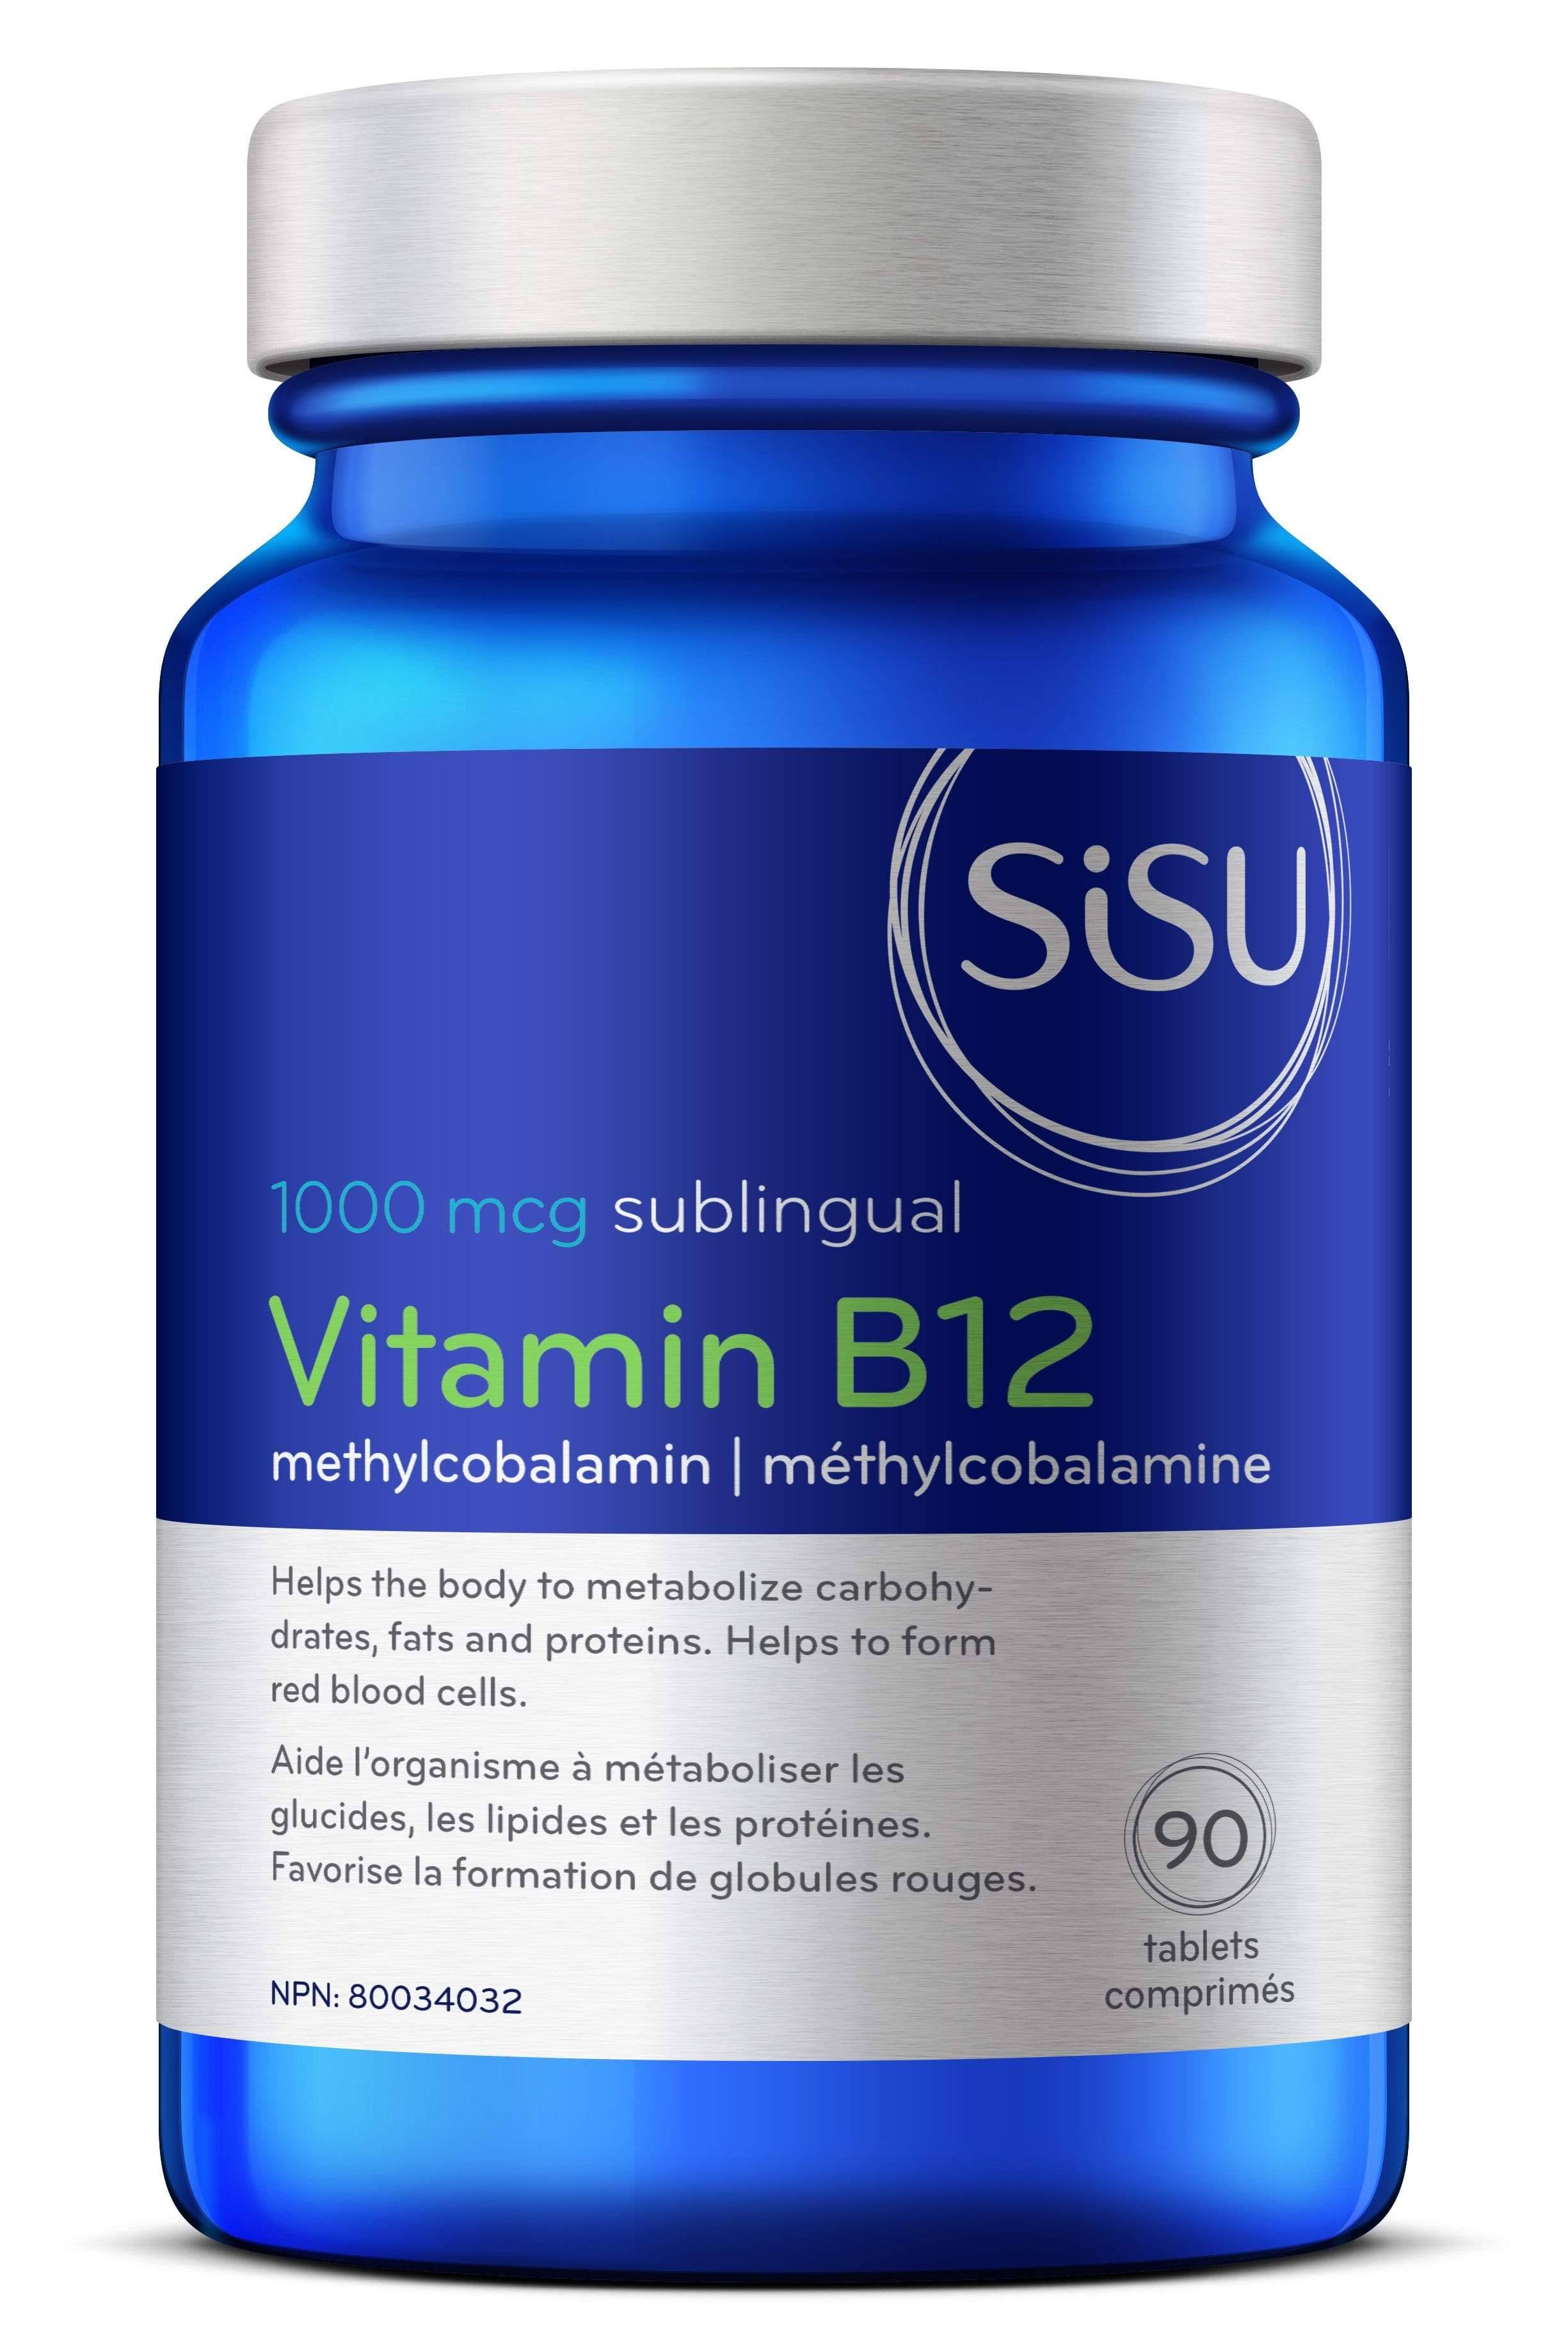 Sisu Methylcobalamin Vitamin B12 Tablets - 1000mcg, 90ct